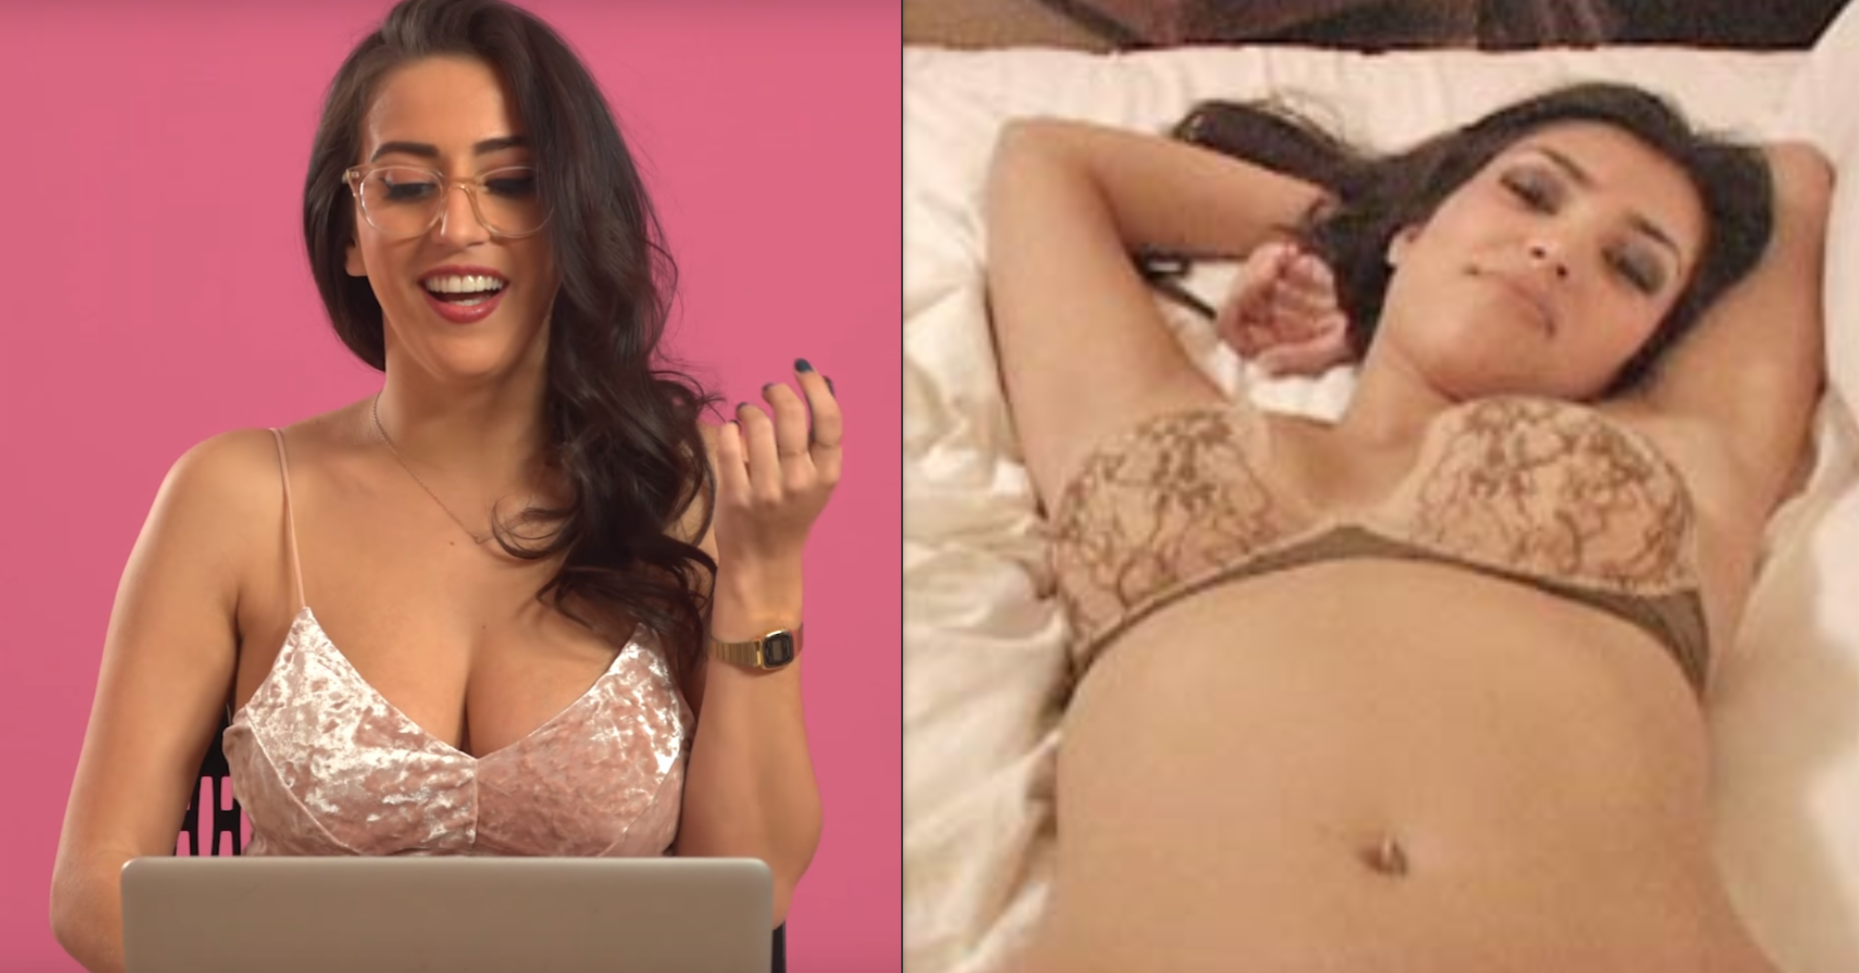 amanda biagioni share kim kardashian ray jay porn photos